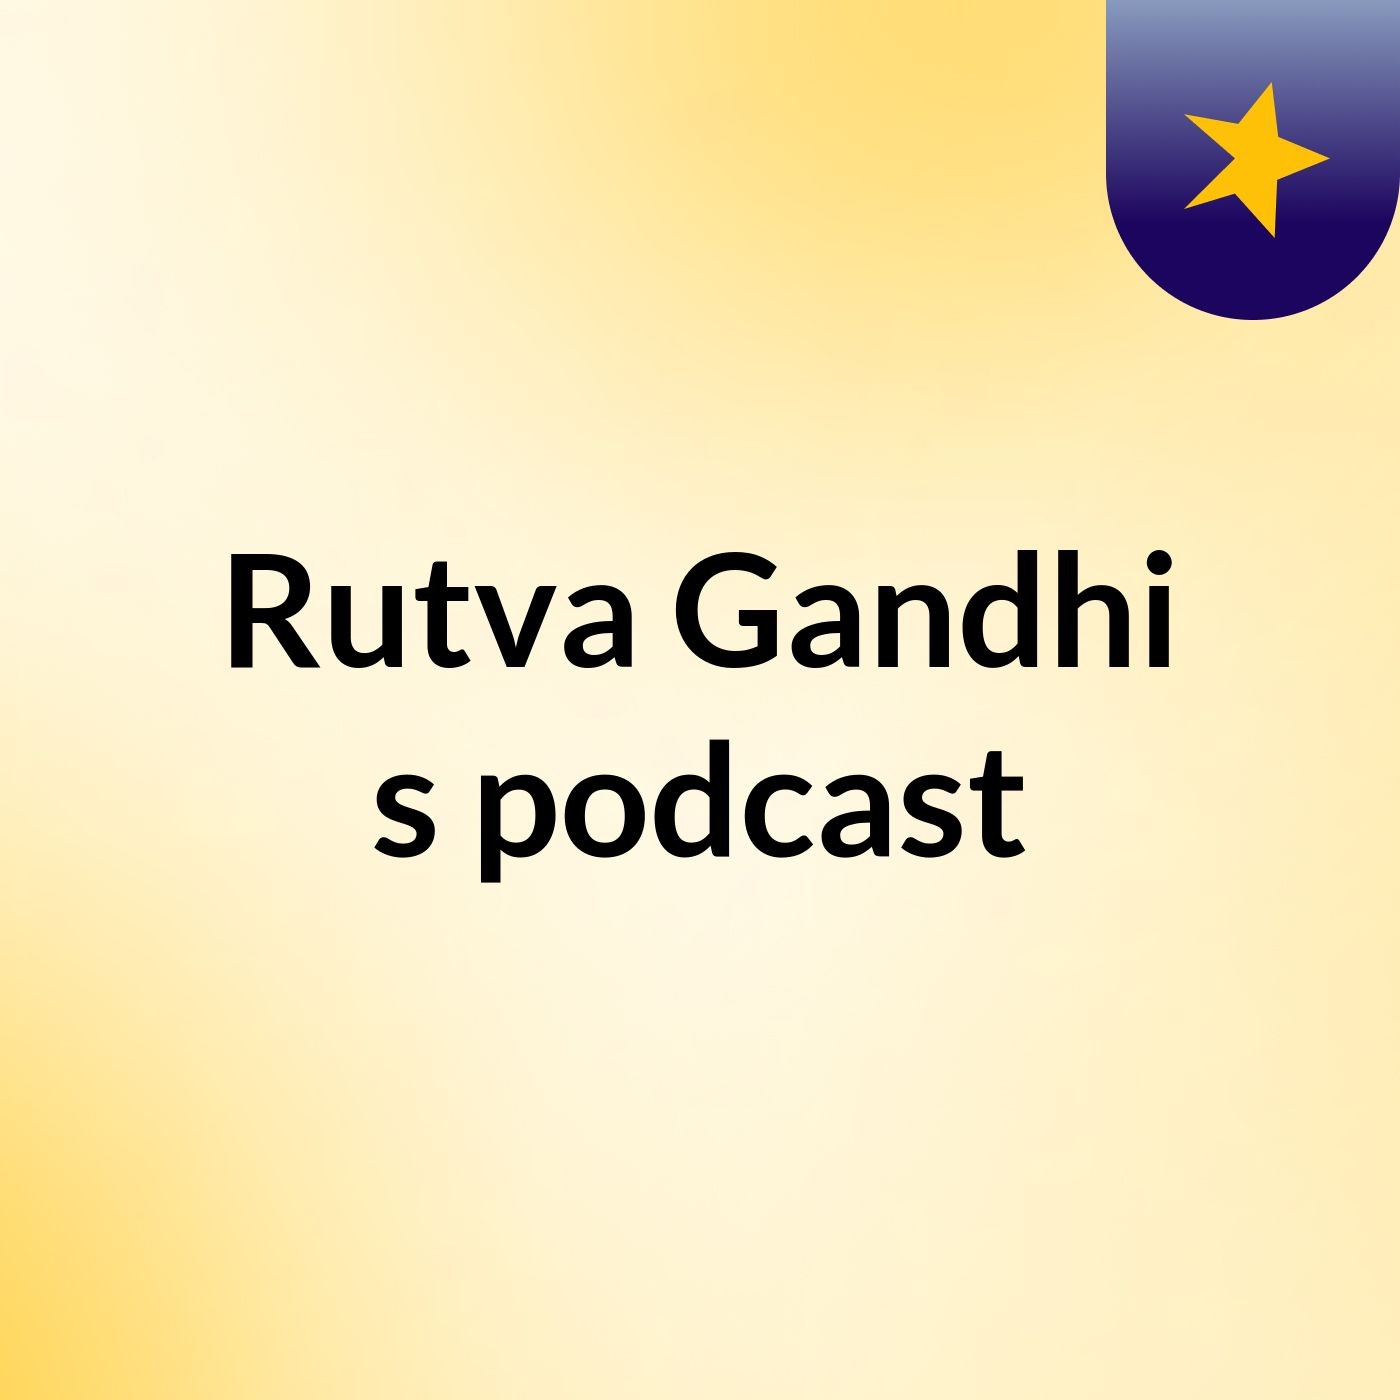 Rutva Gandhi's podcast